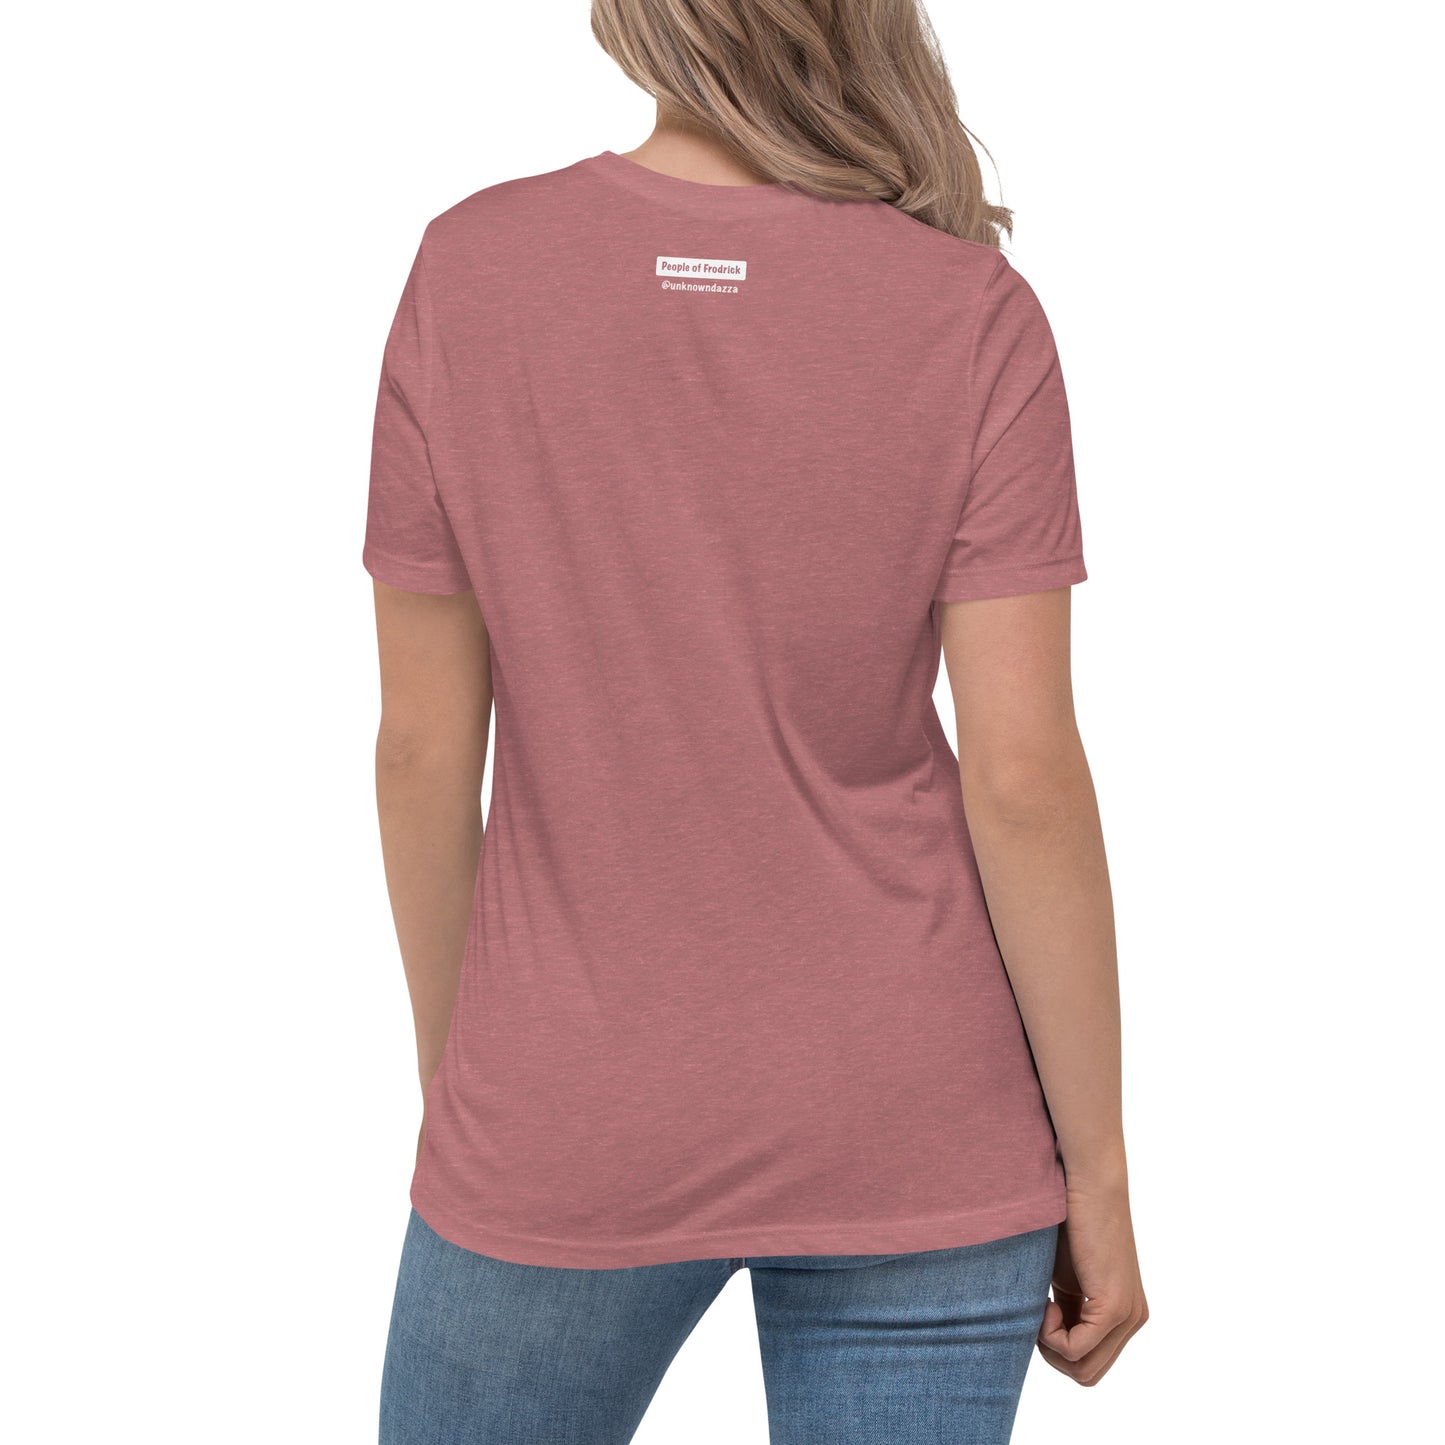 Classic Frod - Women's Relaxed T-Shirt